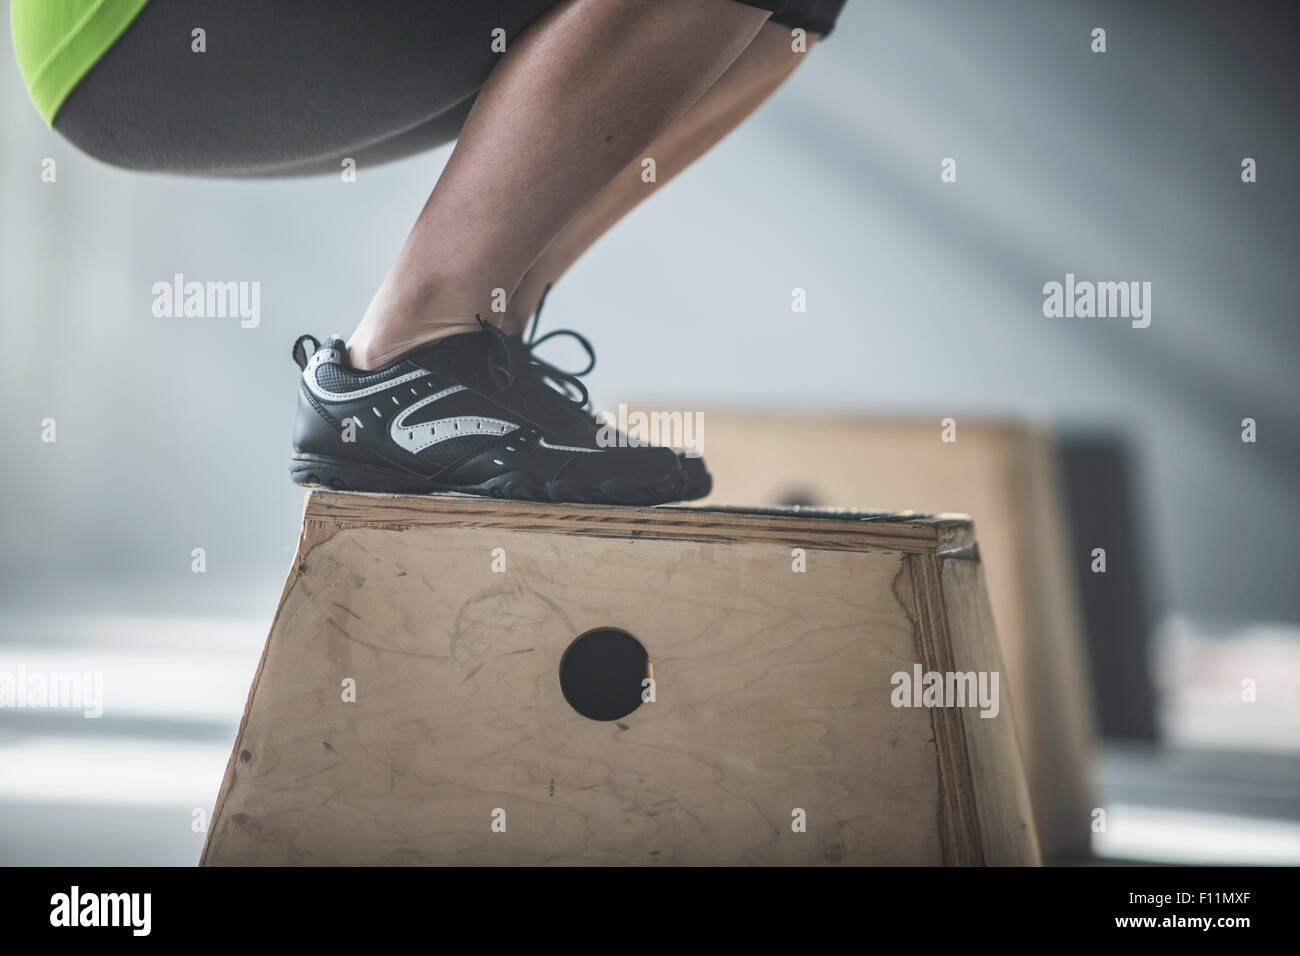 Athlete crouching on platform in gym Stock Photo